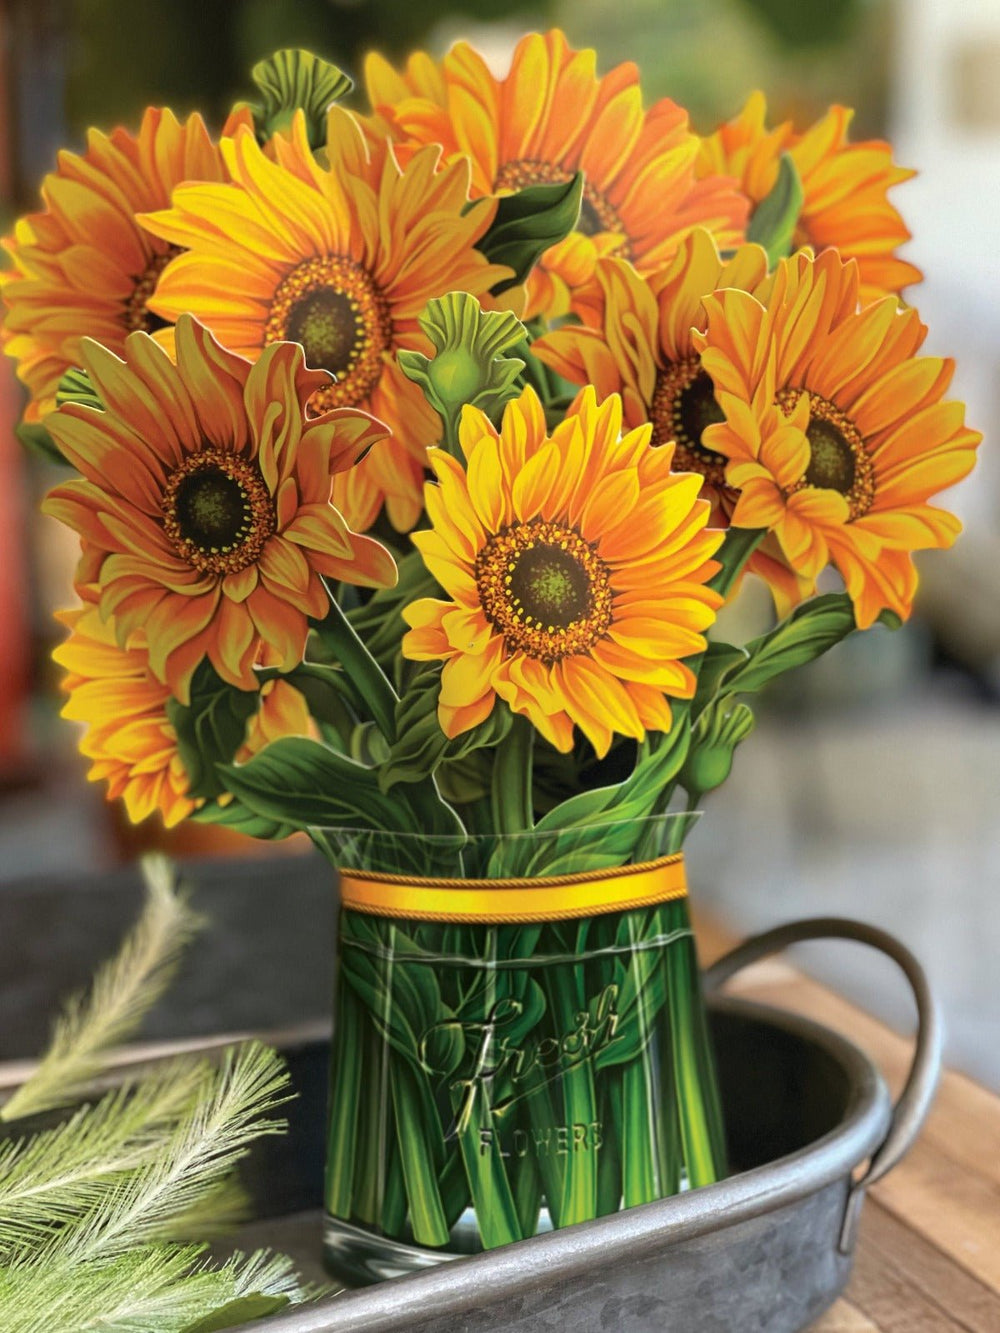 Sunflowers - FreshCut Paper